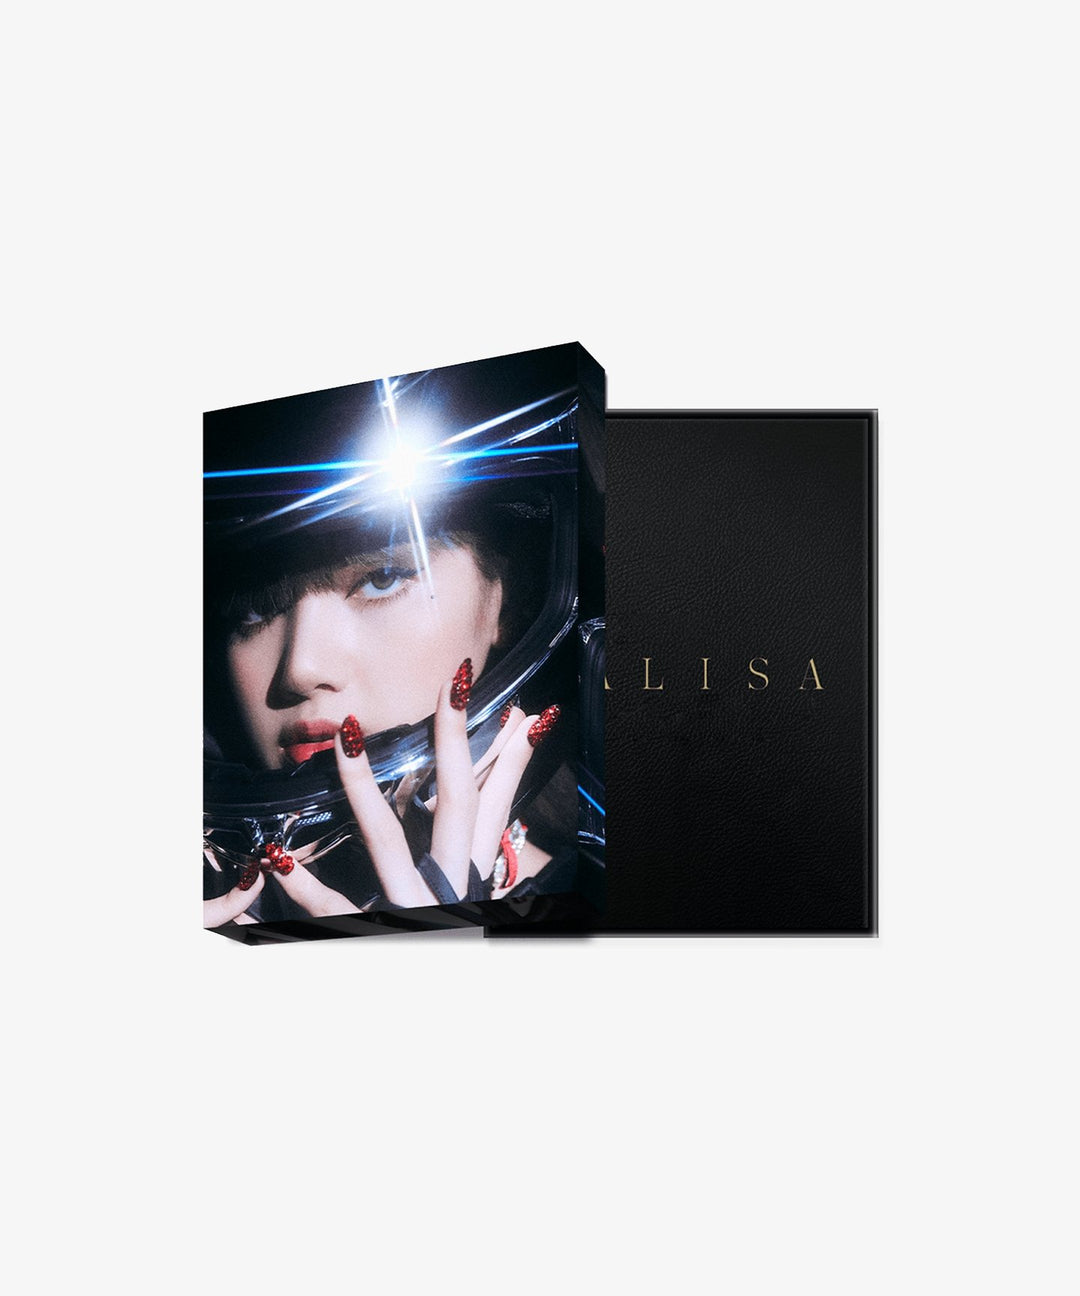 Lisa (Blackpink) - LALISA Photobook Special Edition - Seoul-Mate